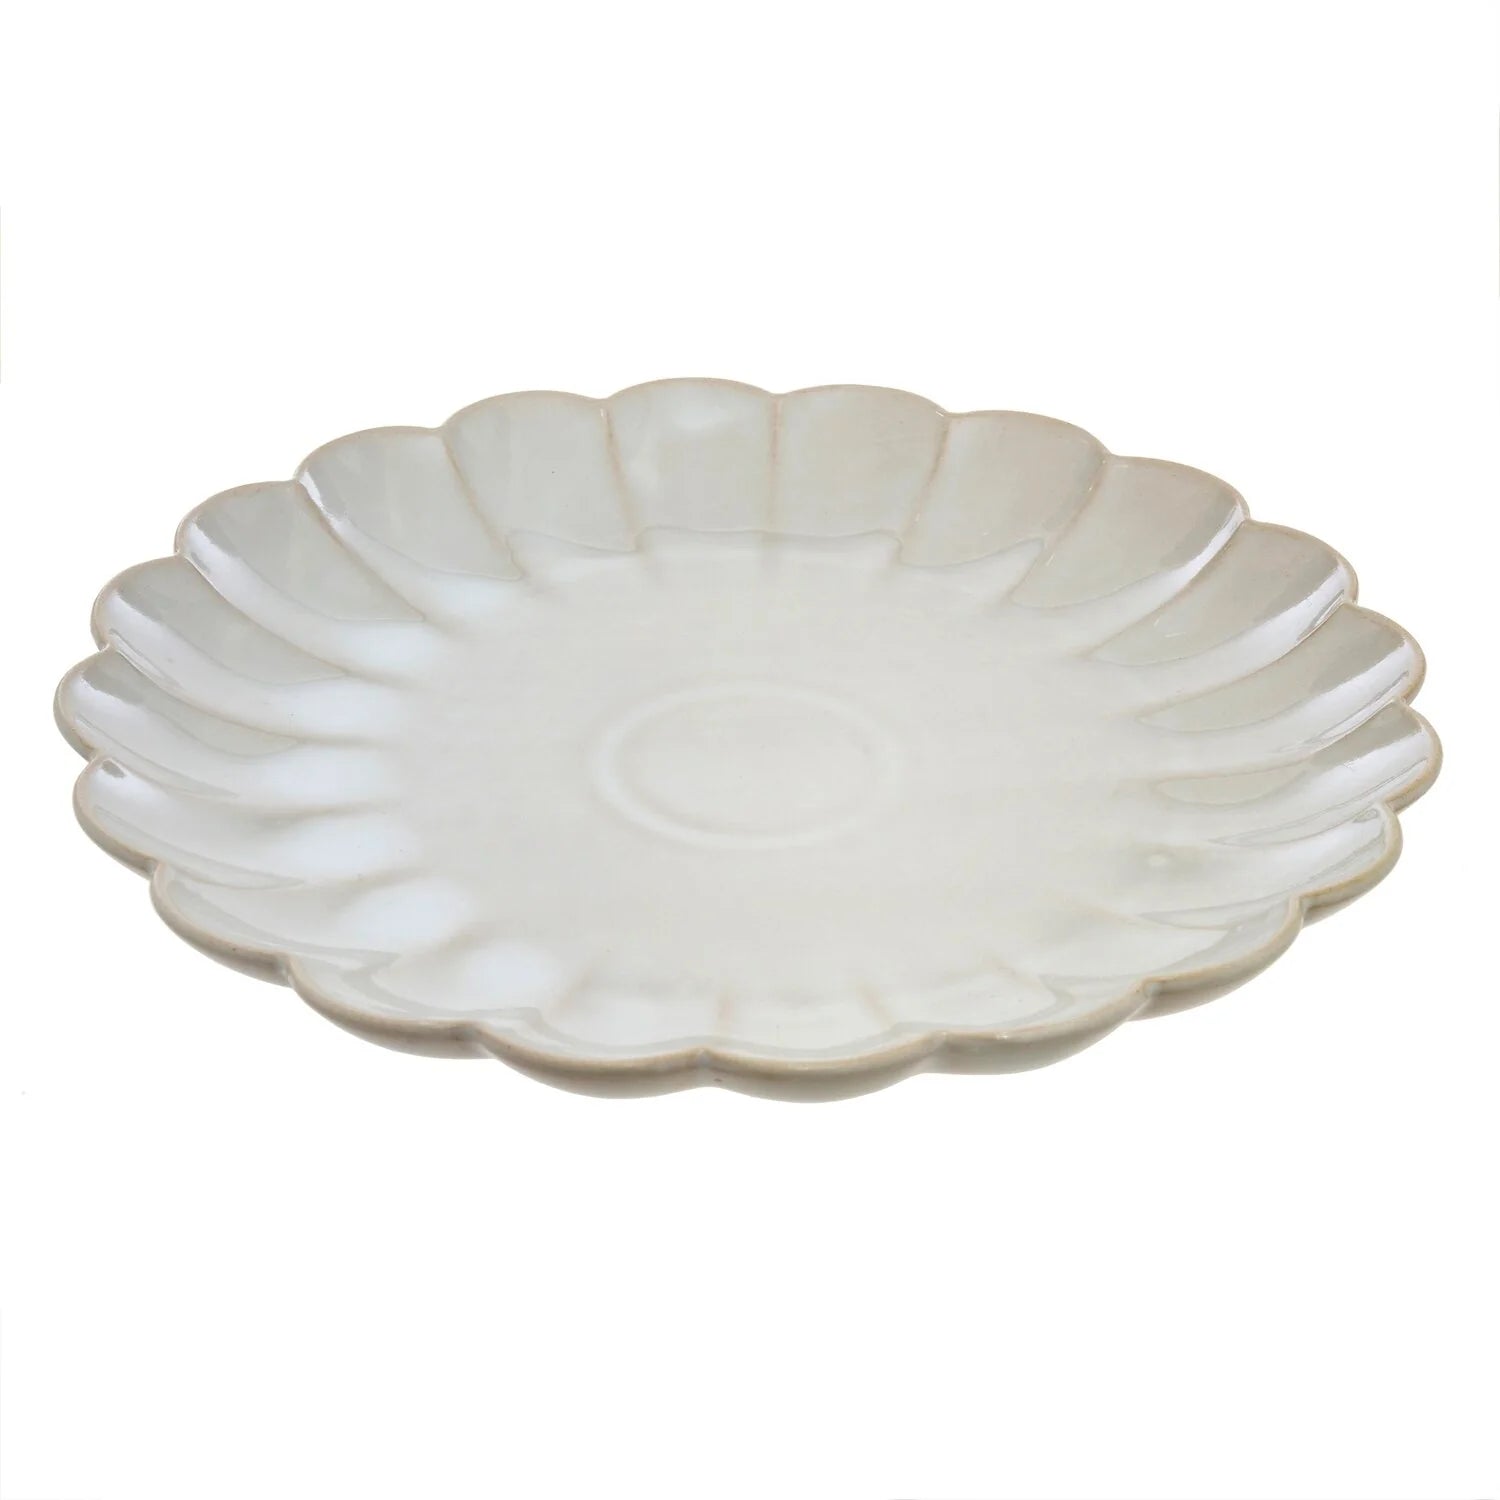 Large White Amelia Plate